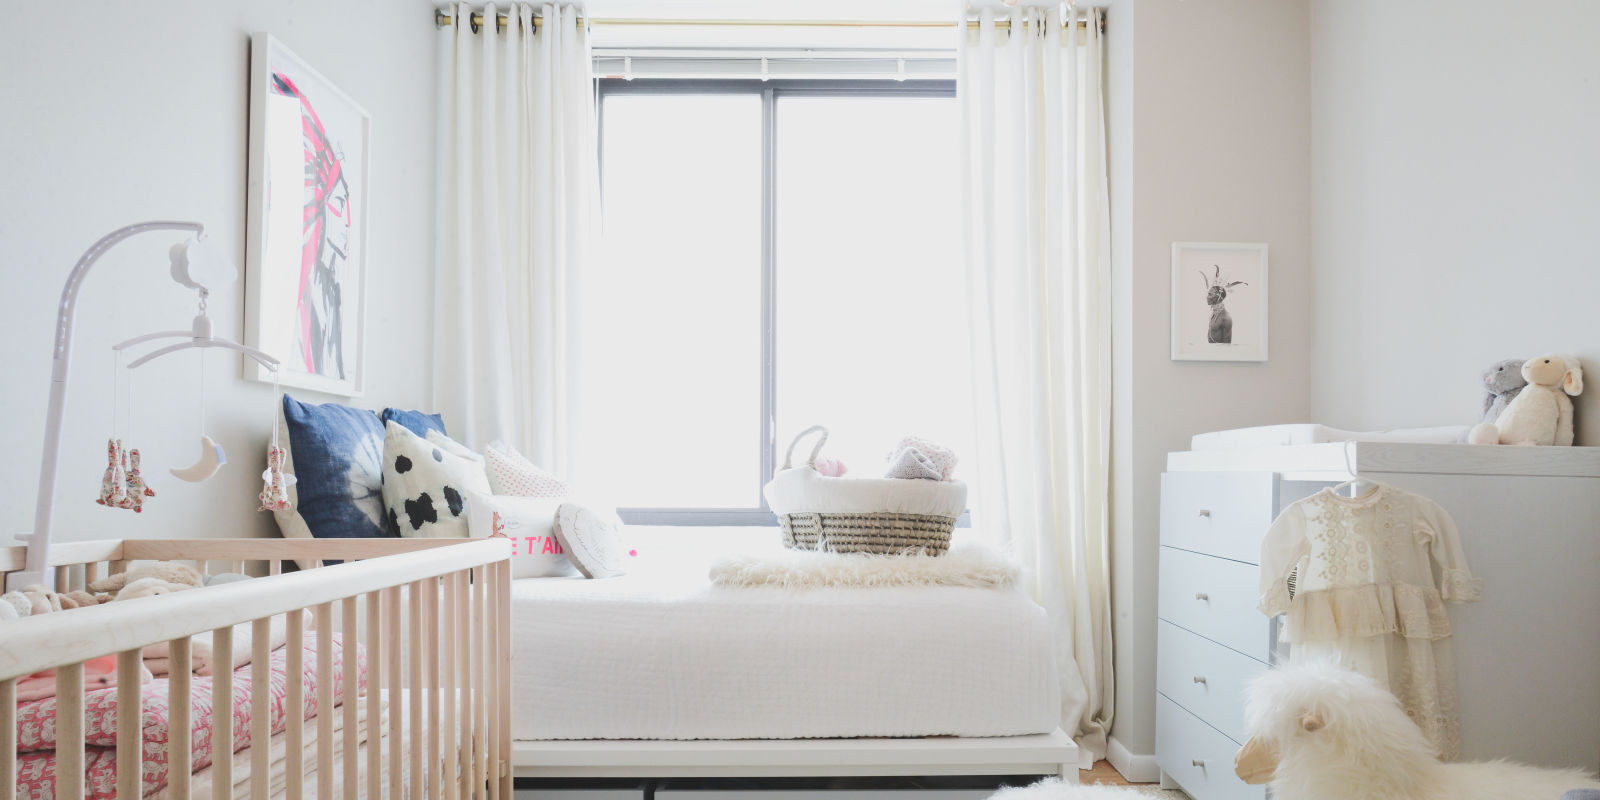 Cheap Baby Room Decor
 8 Best Baby Room Ideas Nursery Decorating Furniture & Decor